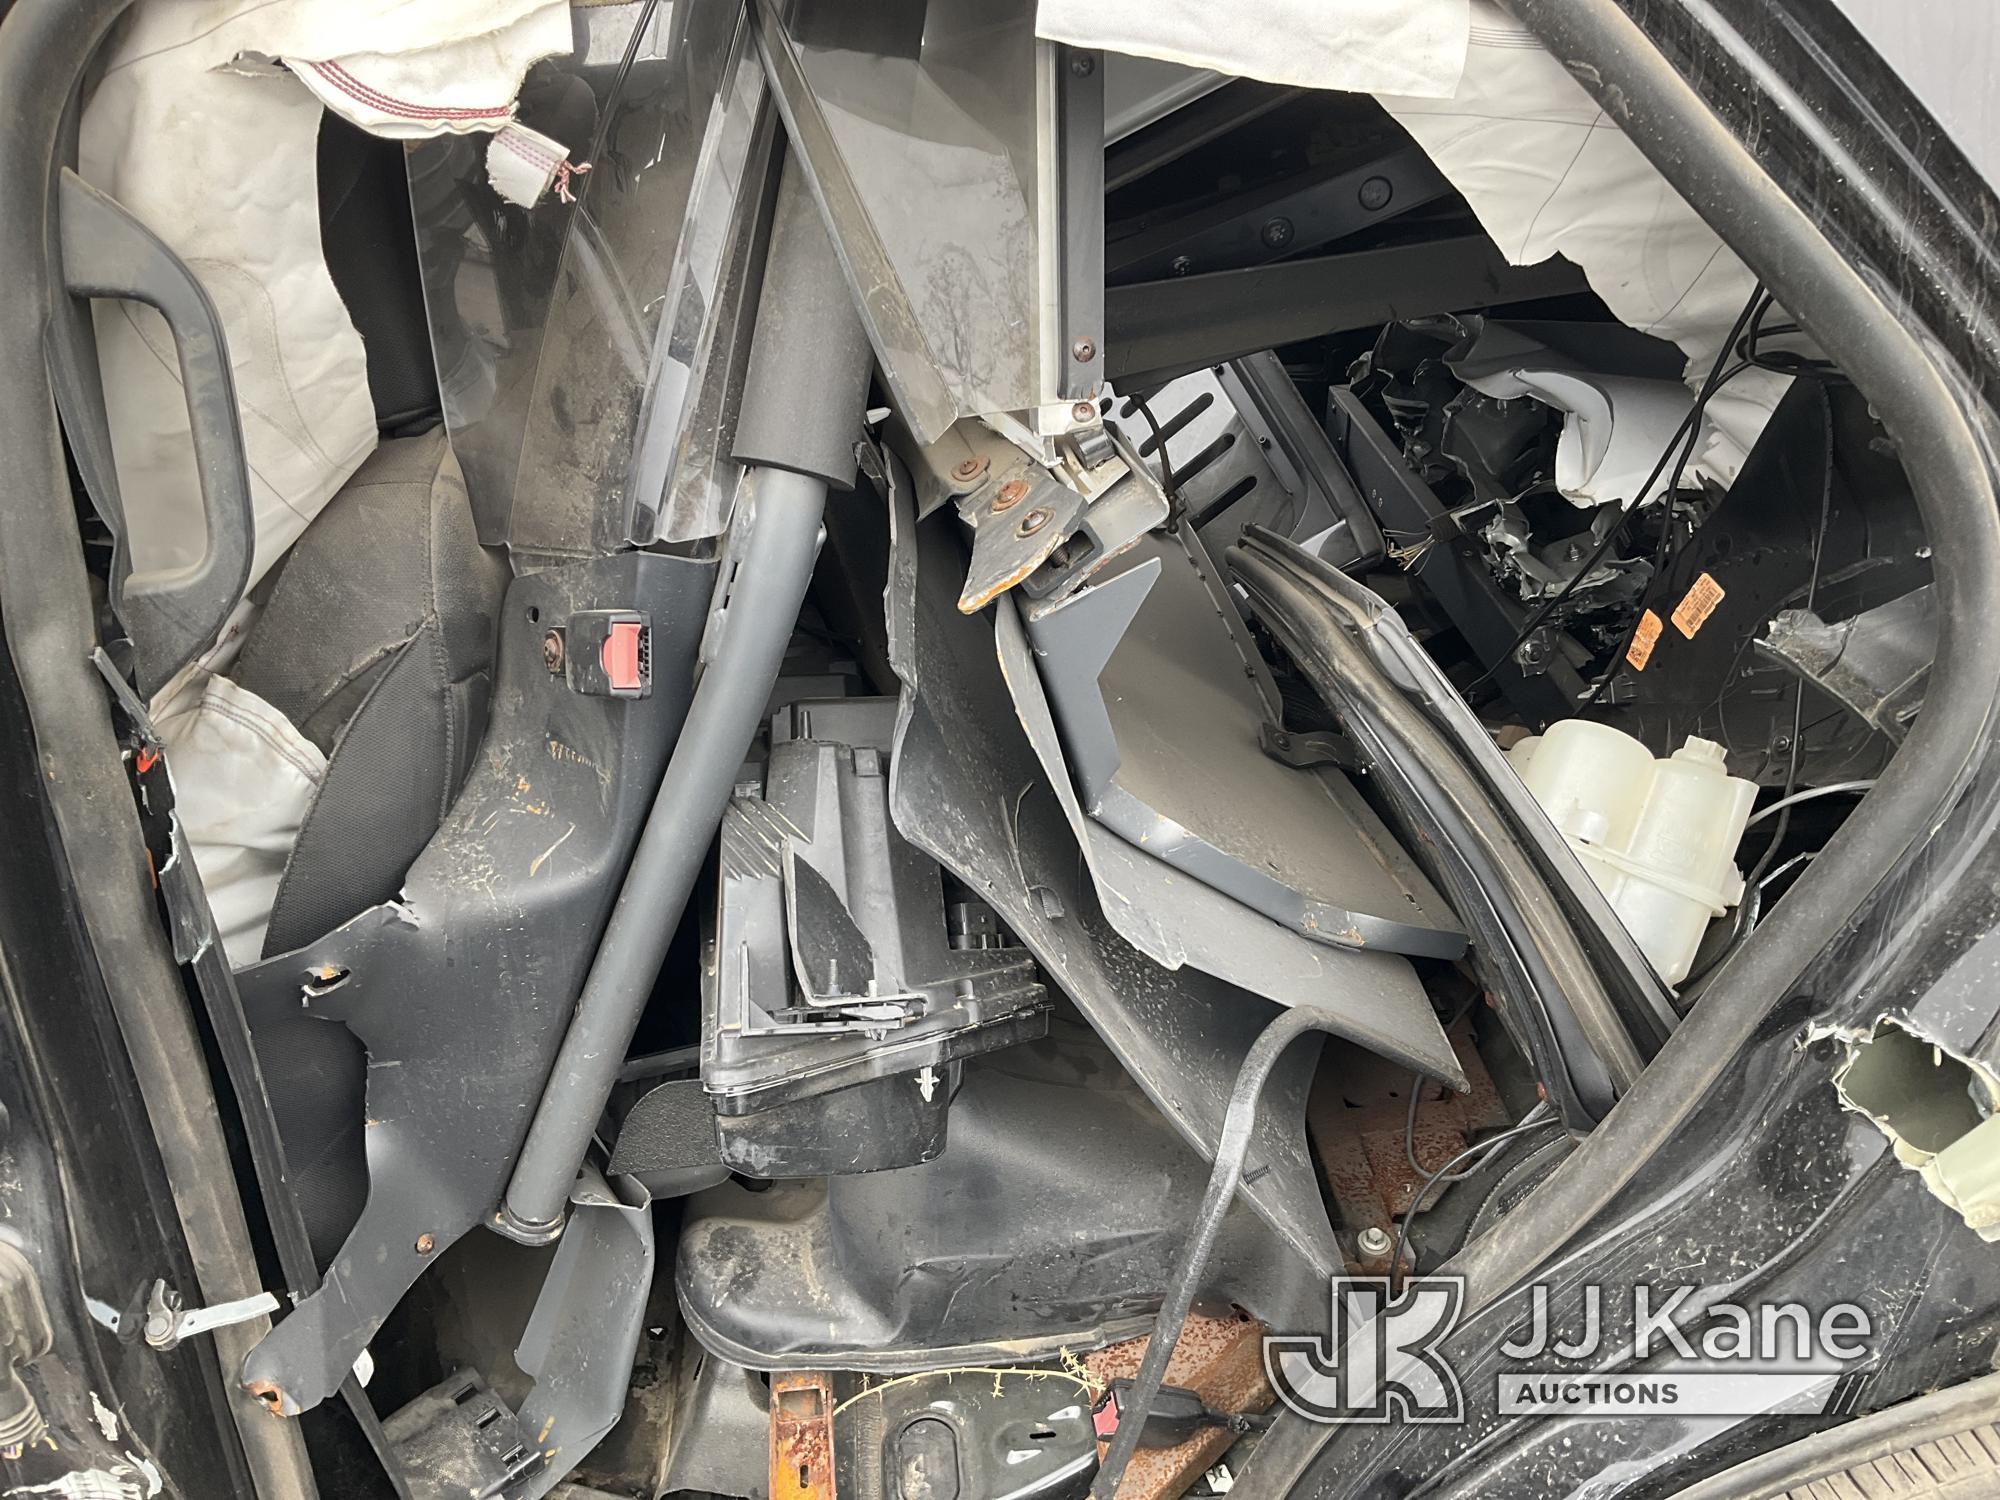 (Jurupa Valley, CA) 2021 Ford Explorer AWD Police Interceptor 4-Door Sport Utility Vehicle Not Runni